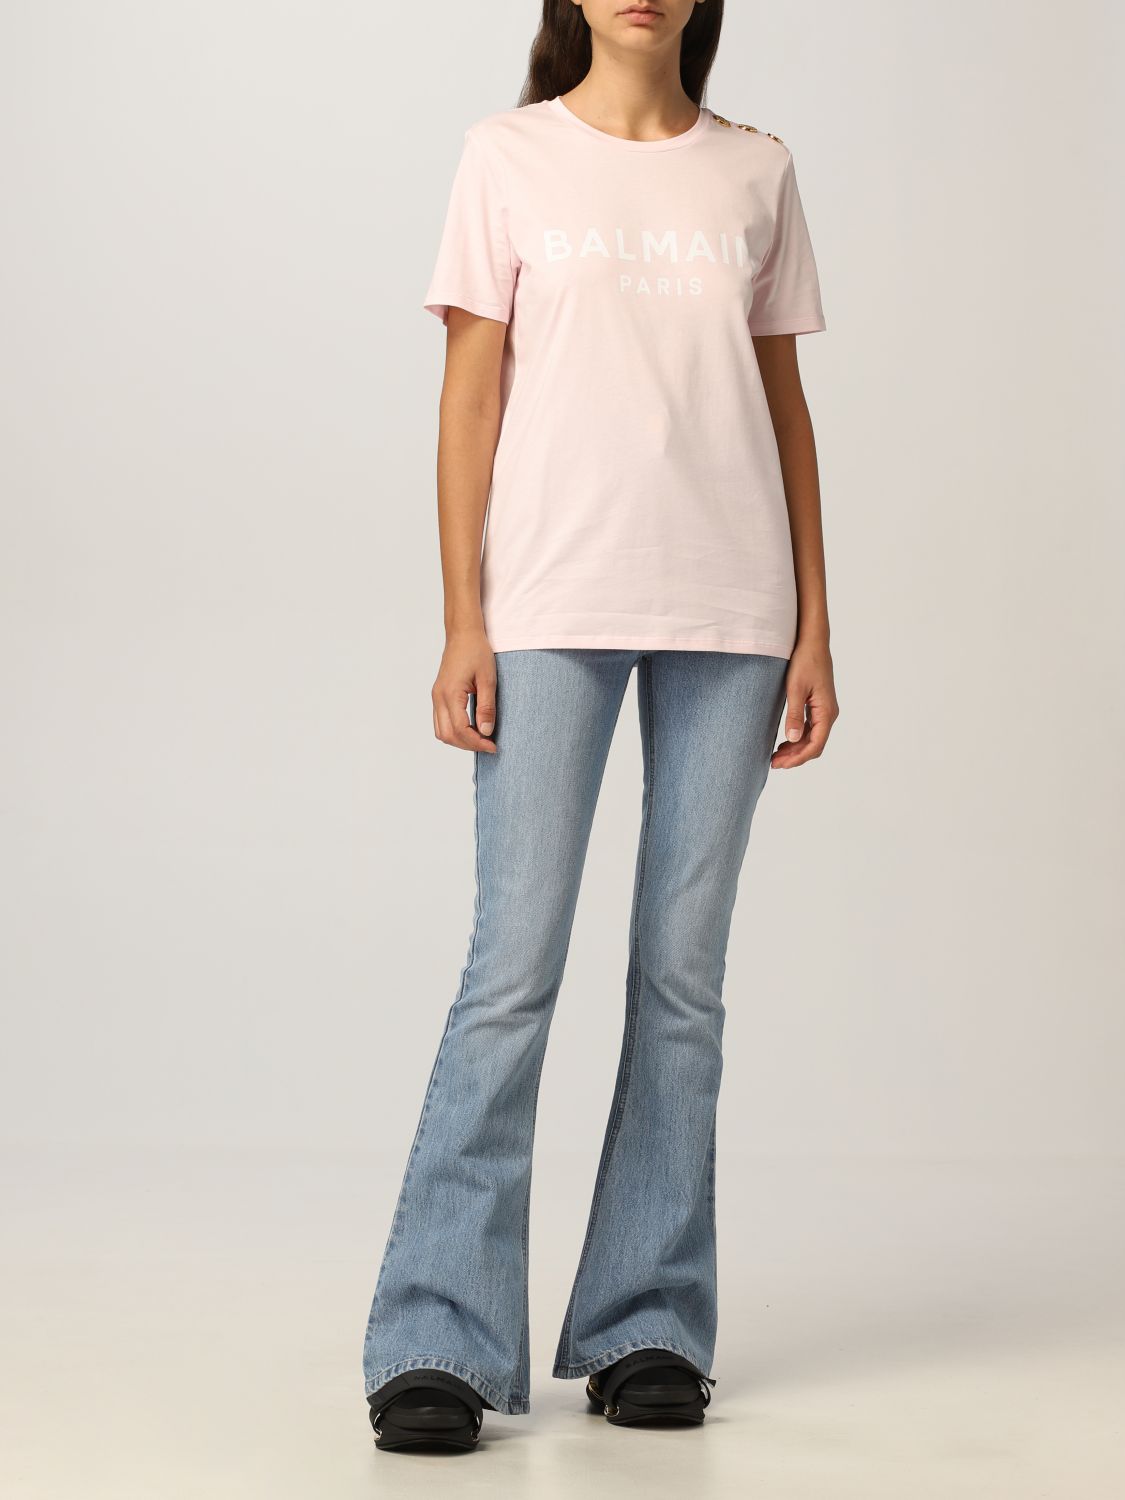 Camiseta Balmain: Camiseta mujer Balmain rosa 2